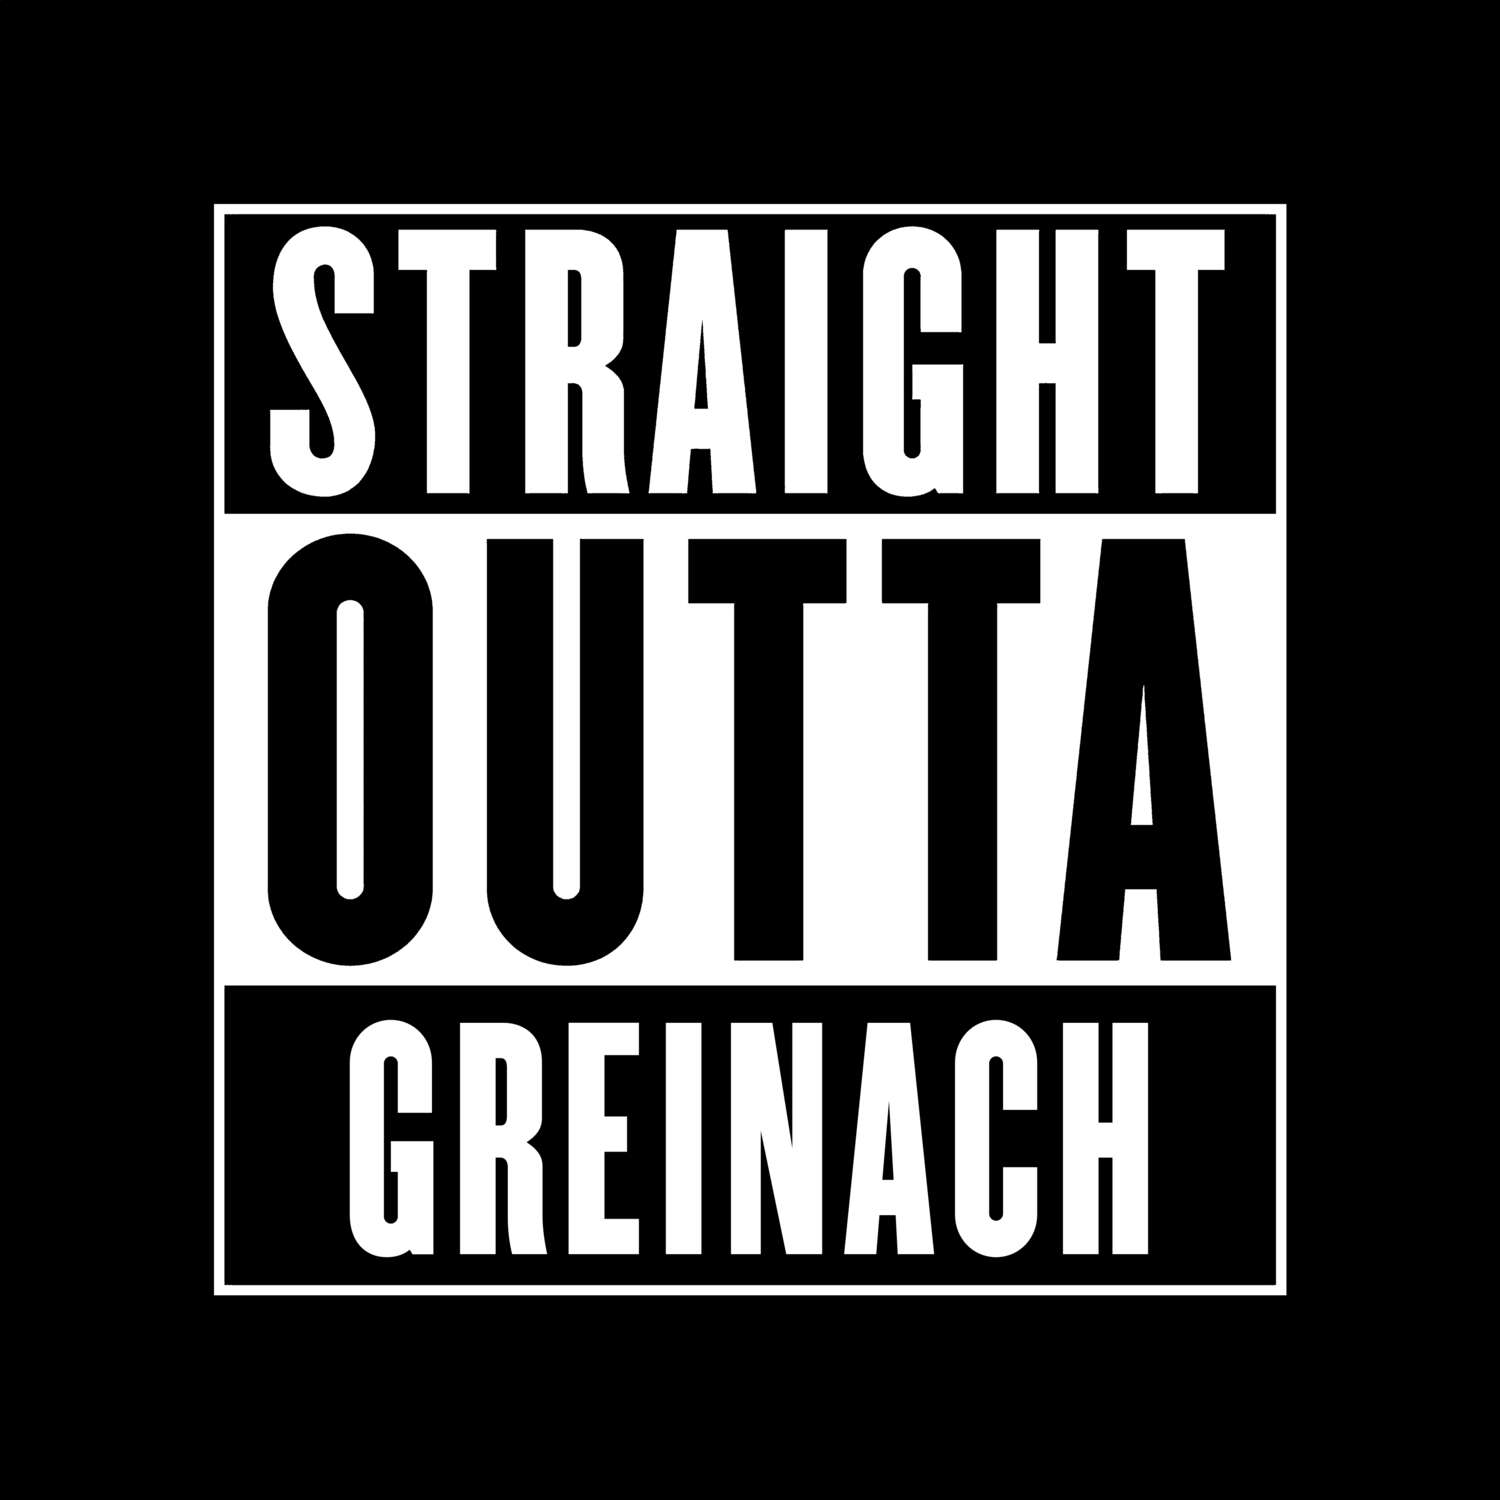 Greinach T-Shirt »Straight Outta«